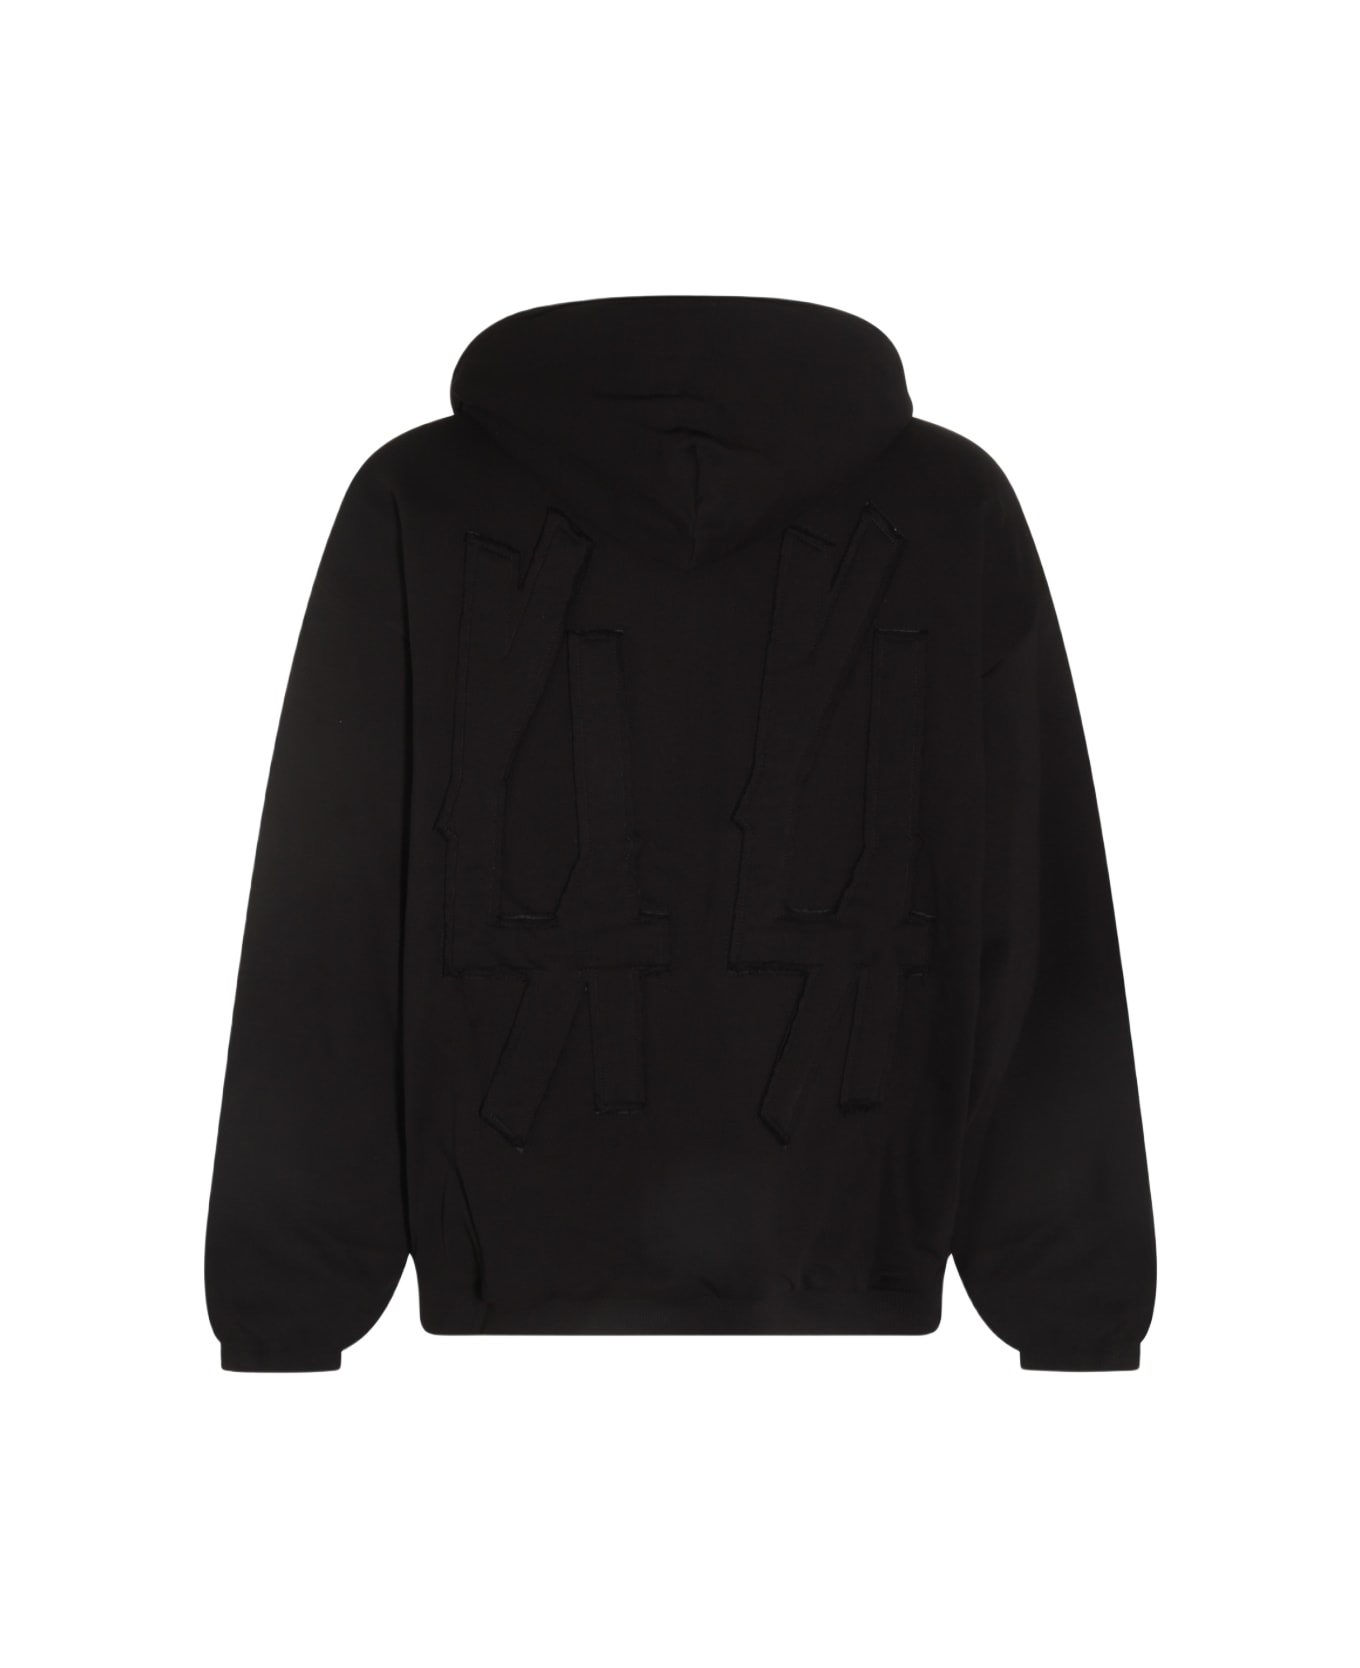 44 Label Group Black Cotton Sweatshirt - Black